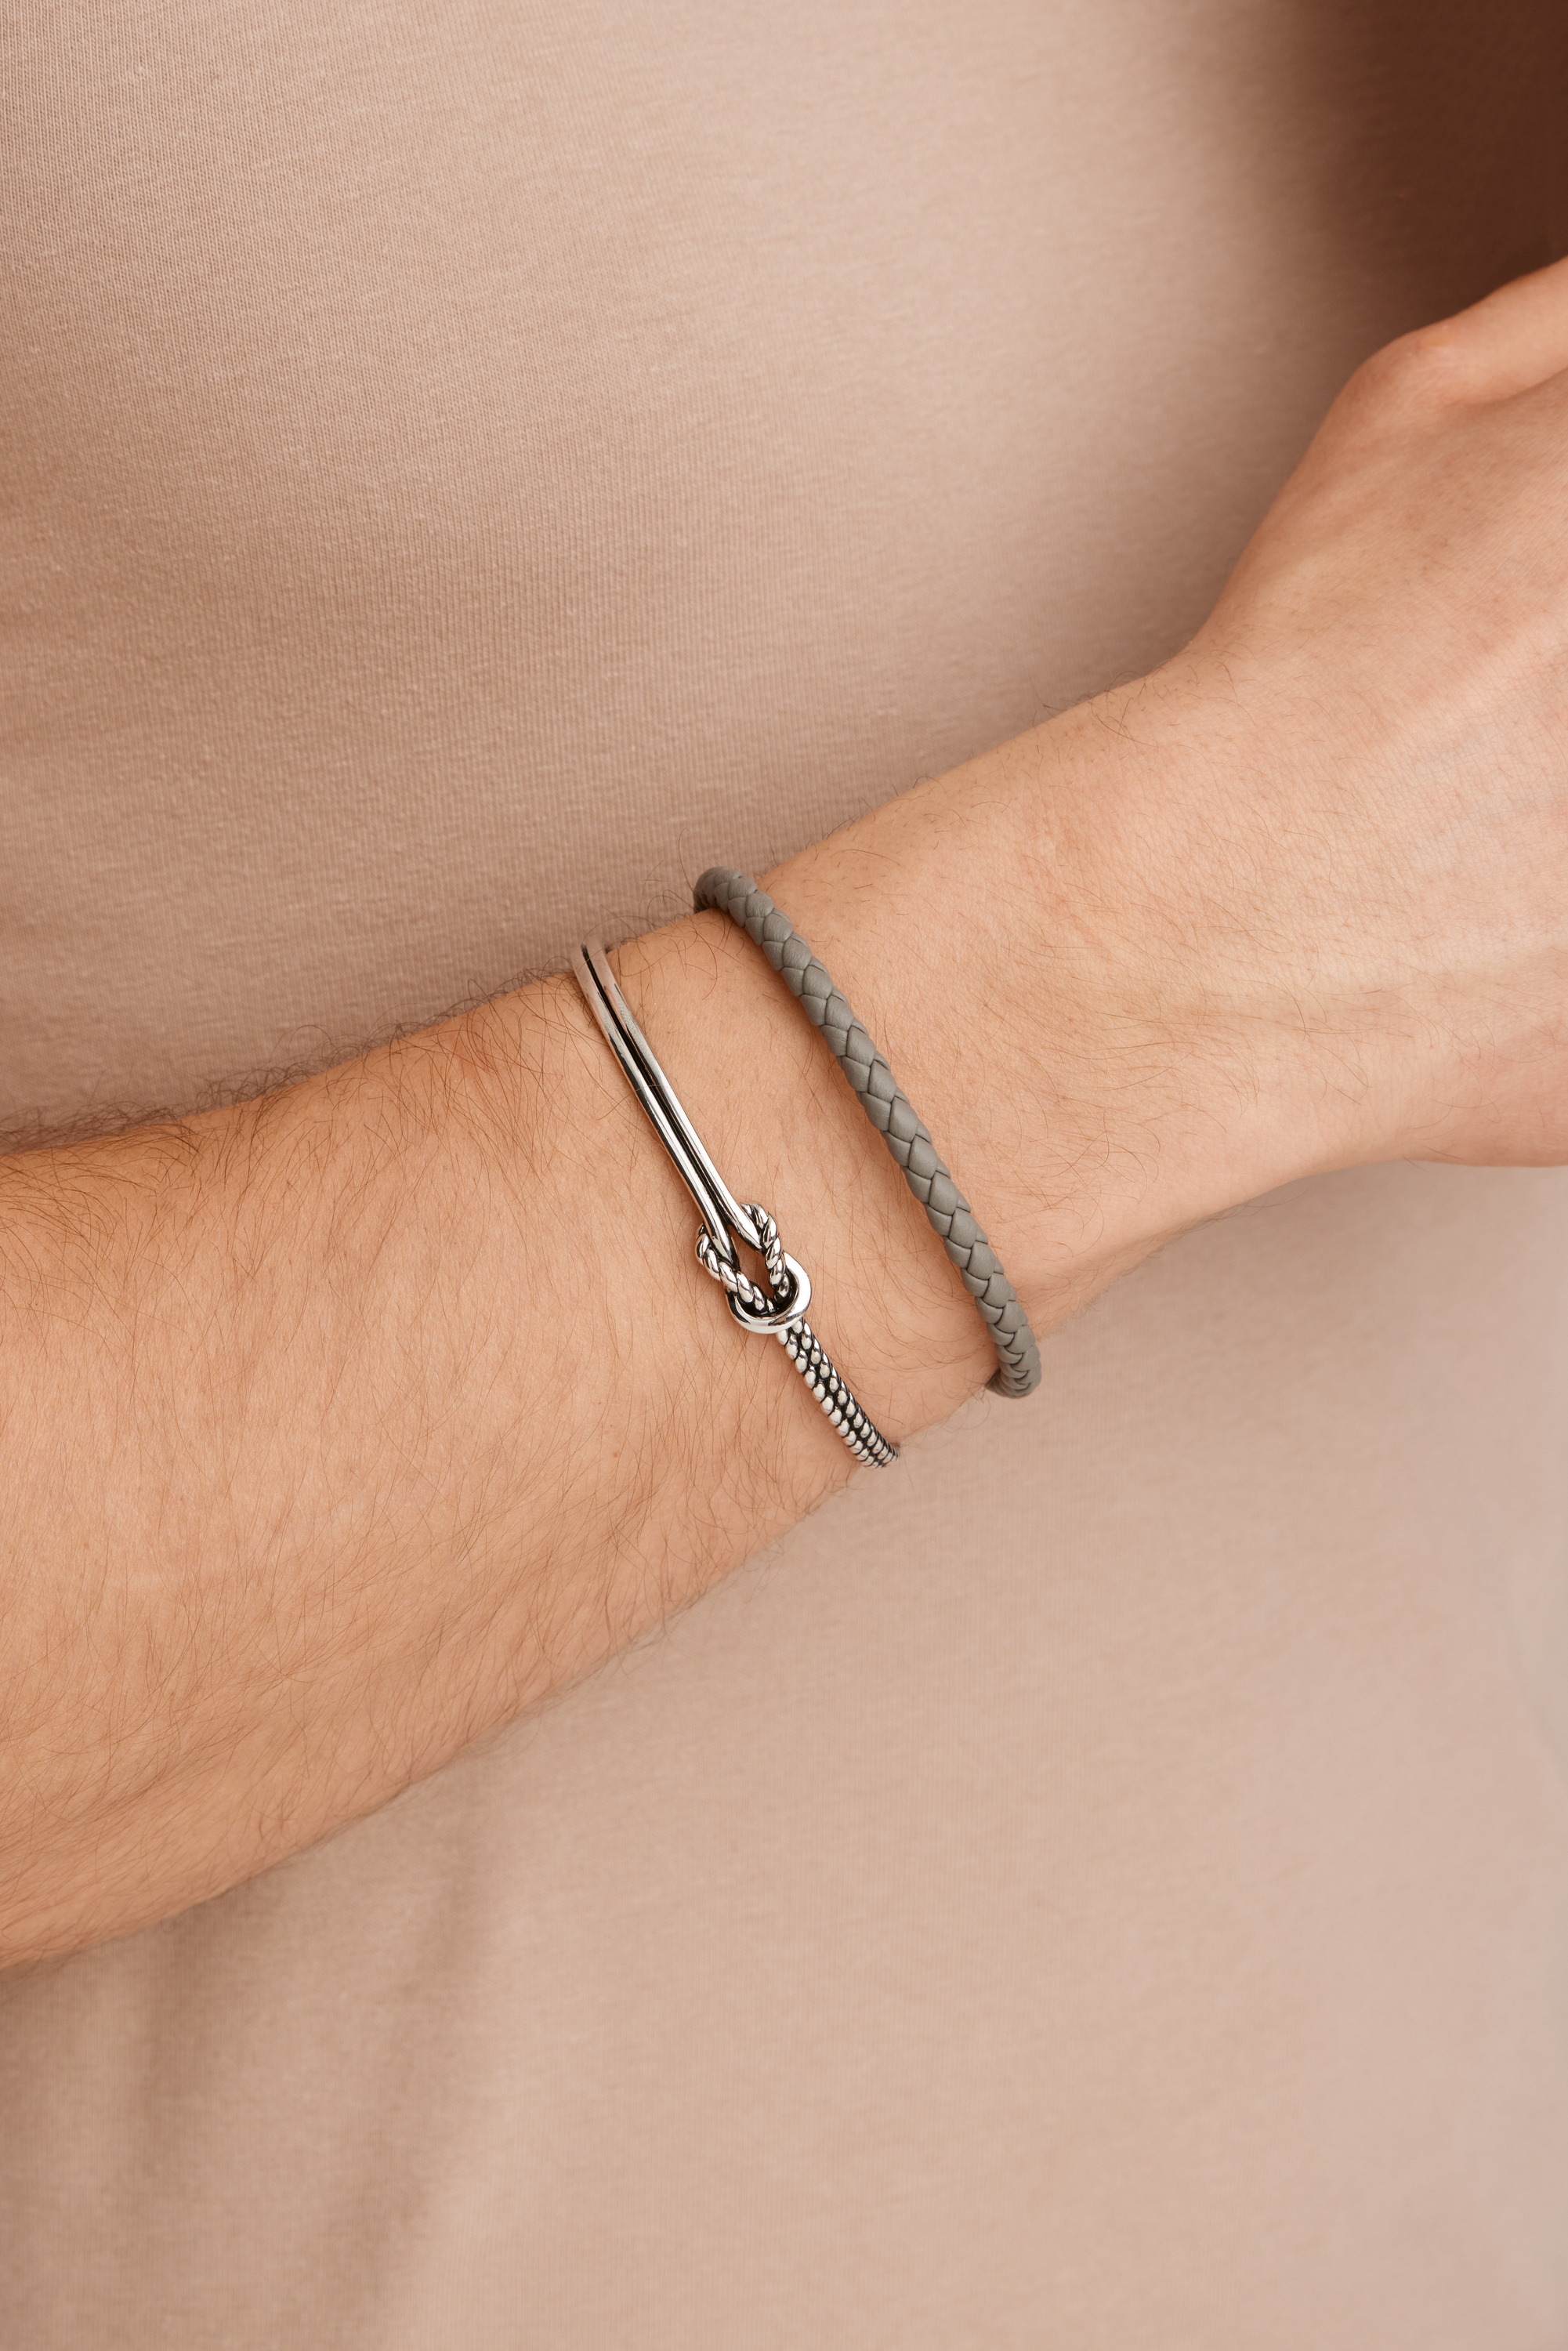 cai Armband Leder olivenblattgegerbt grau schwarz | Armbänder | Armschmuck  | caï jewels